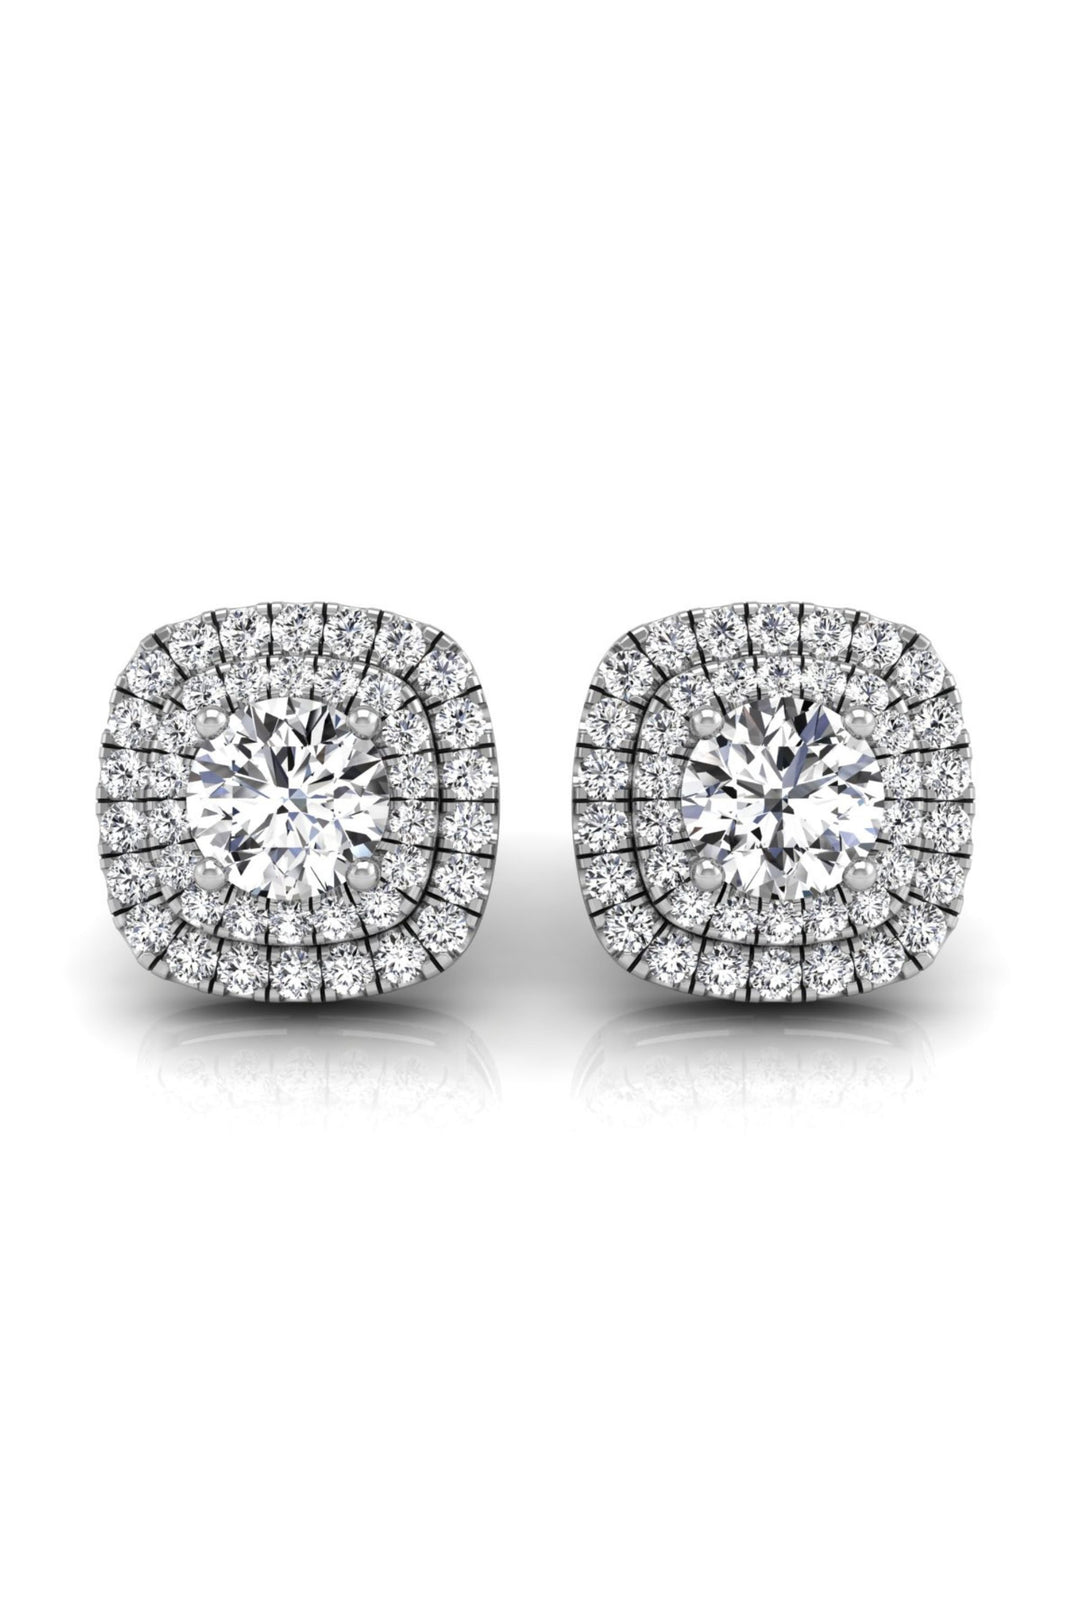 Round Cut Double Halo Moissanite Diamond Earrings for Women